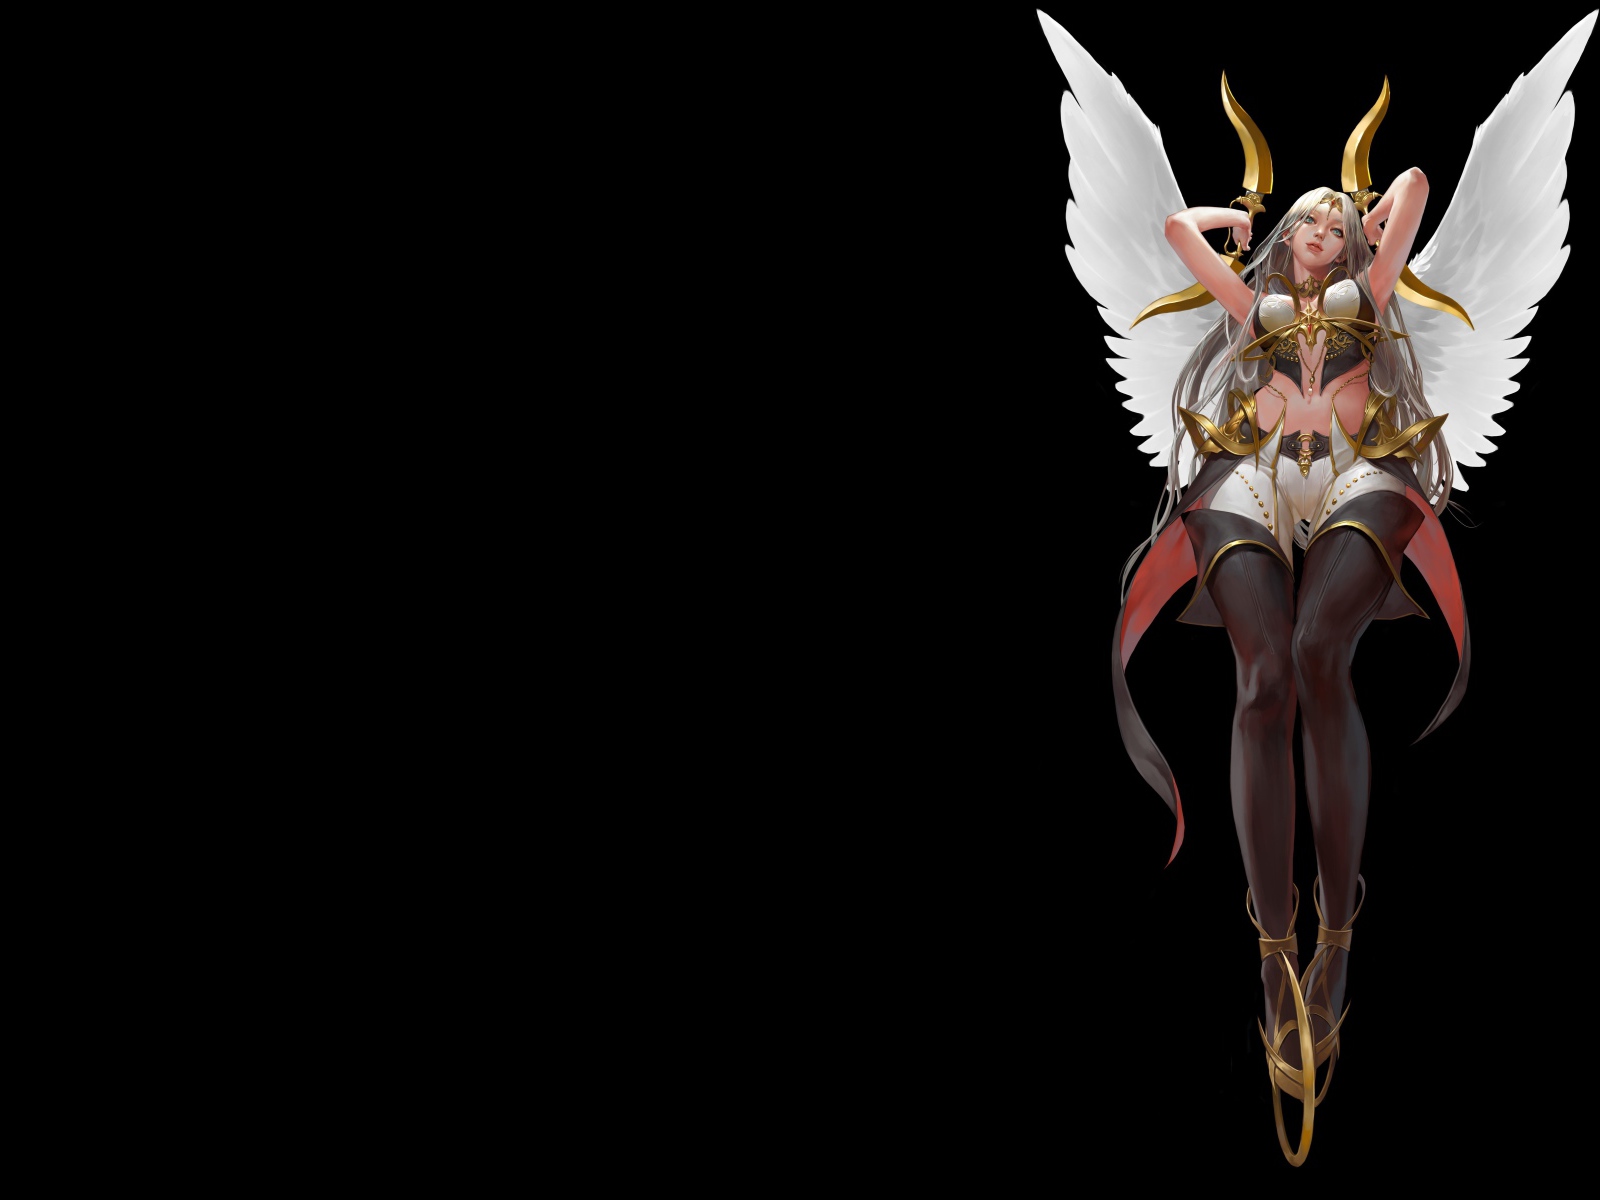 Angelic Warrior Girl on a Fantasy Black Background